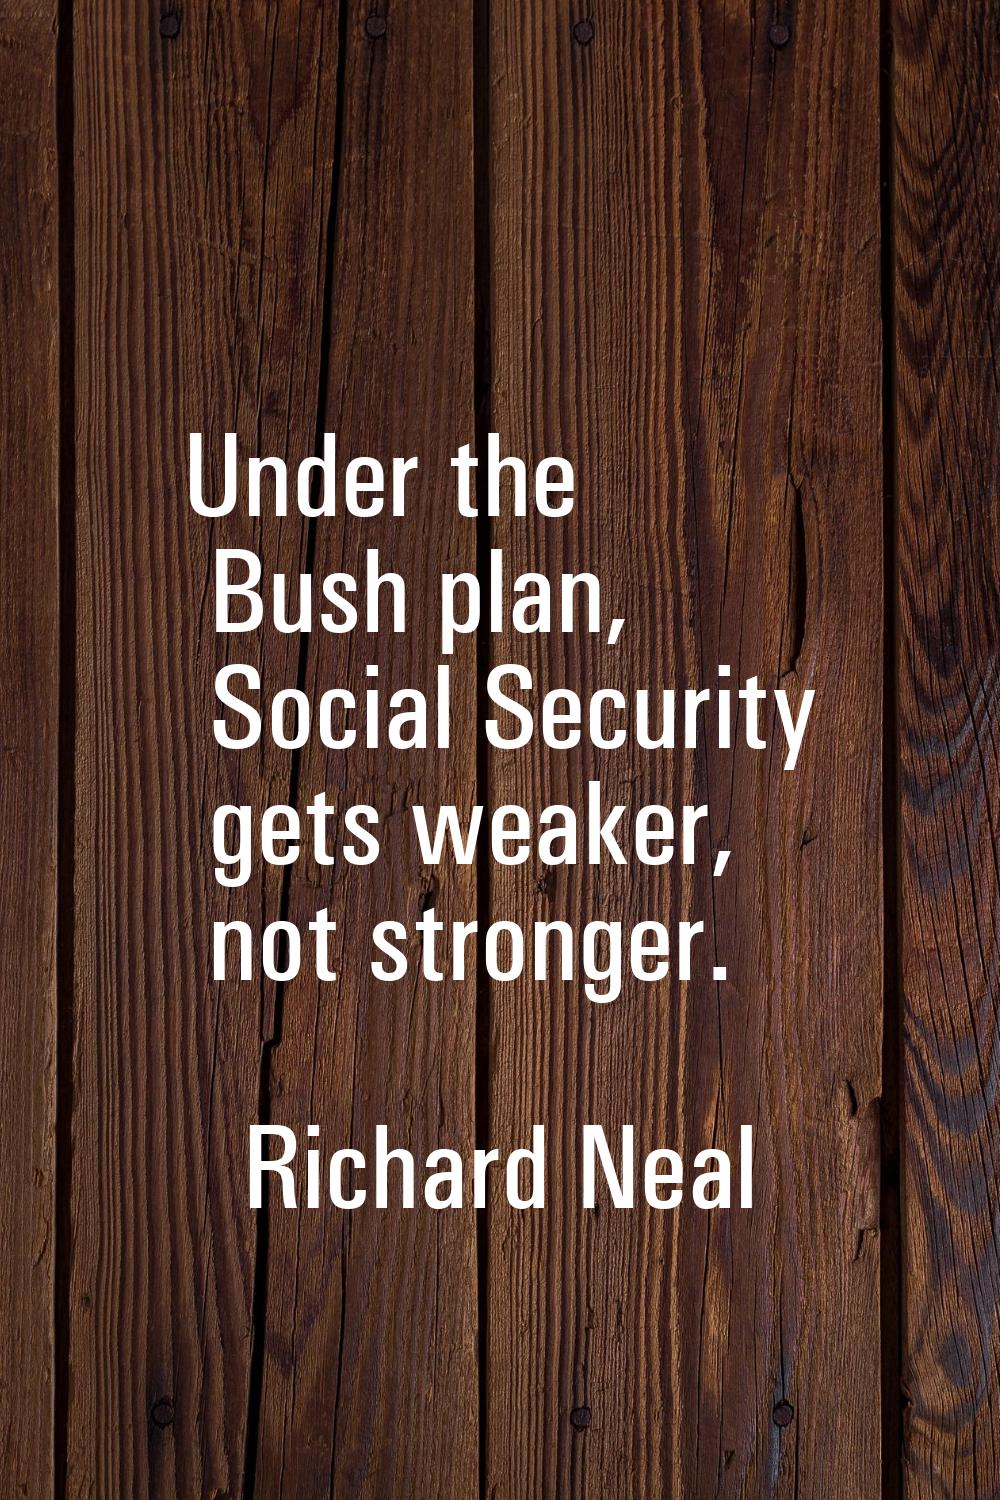 Under the Bush plan, Social Security gets weaker, not stronger.